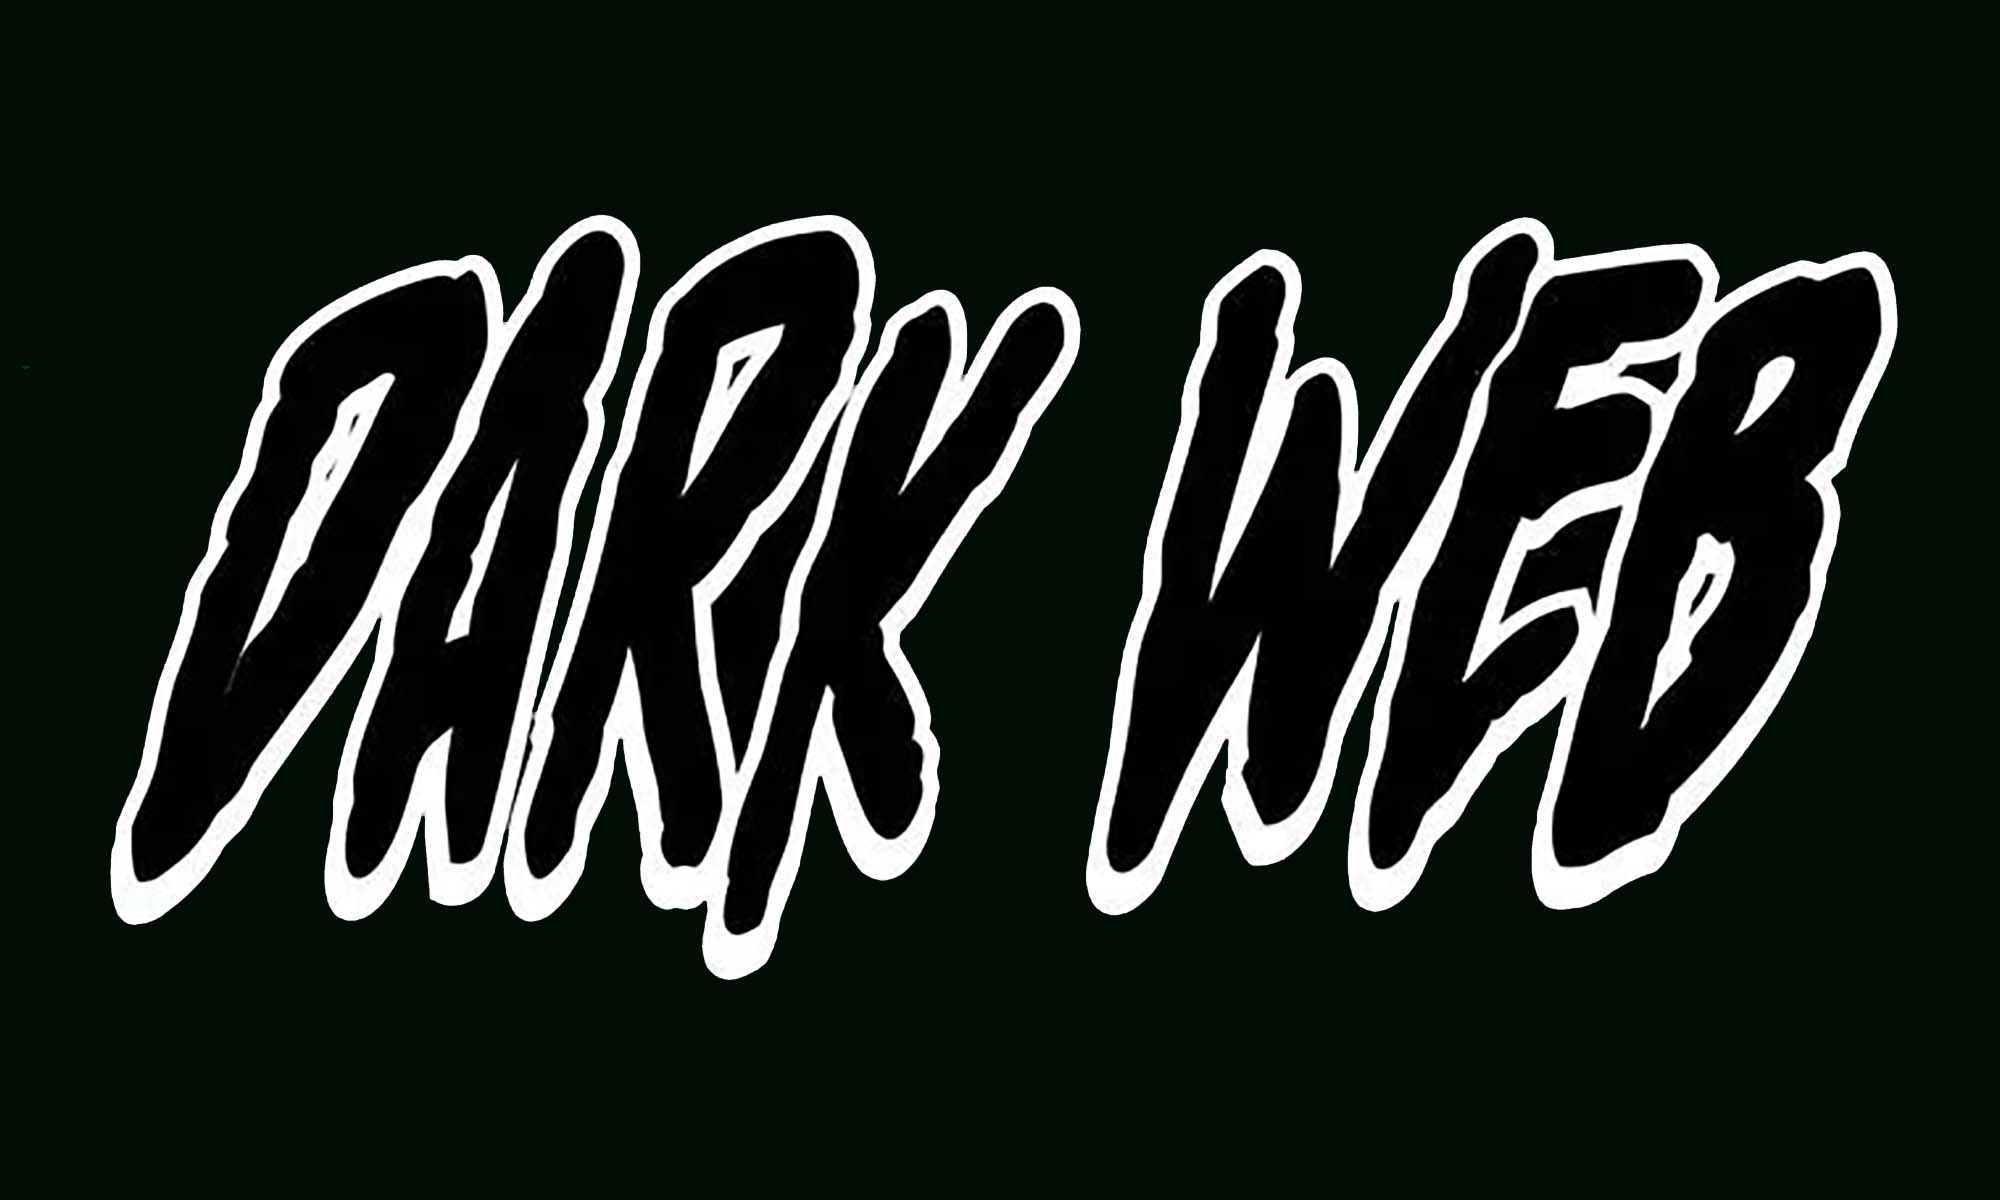 Dark Web logo